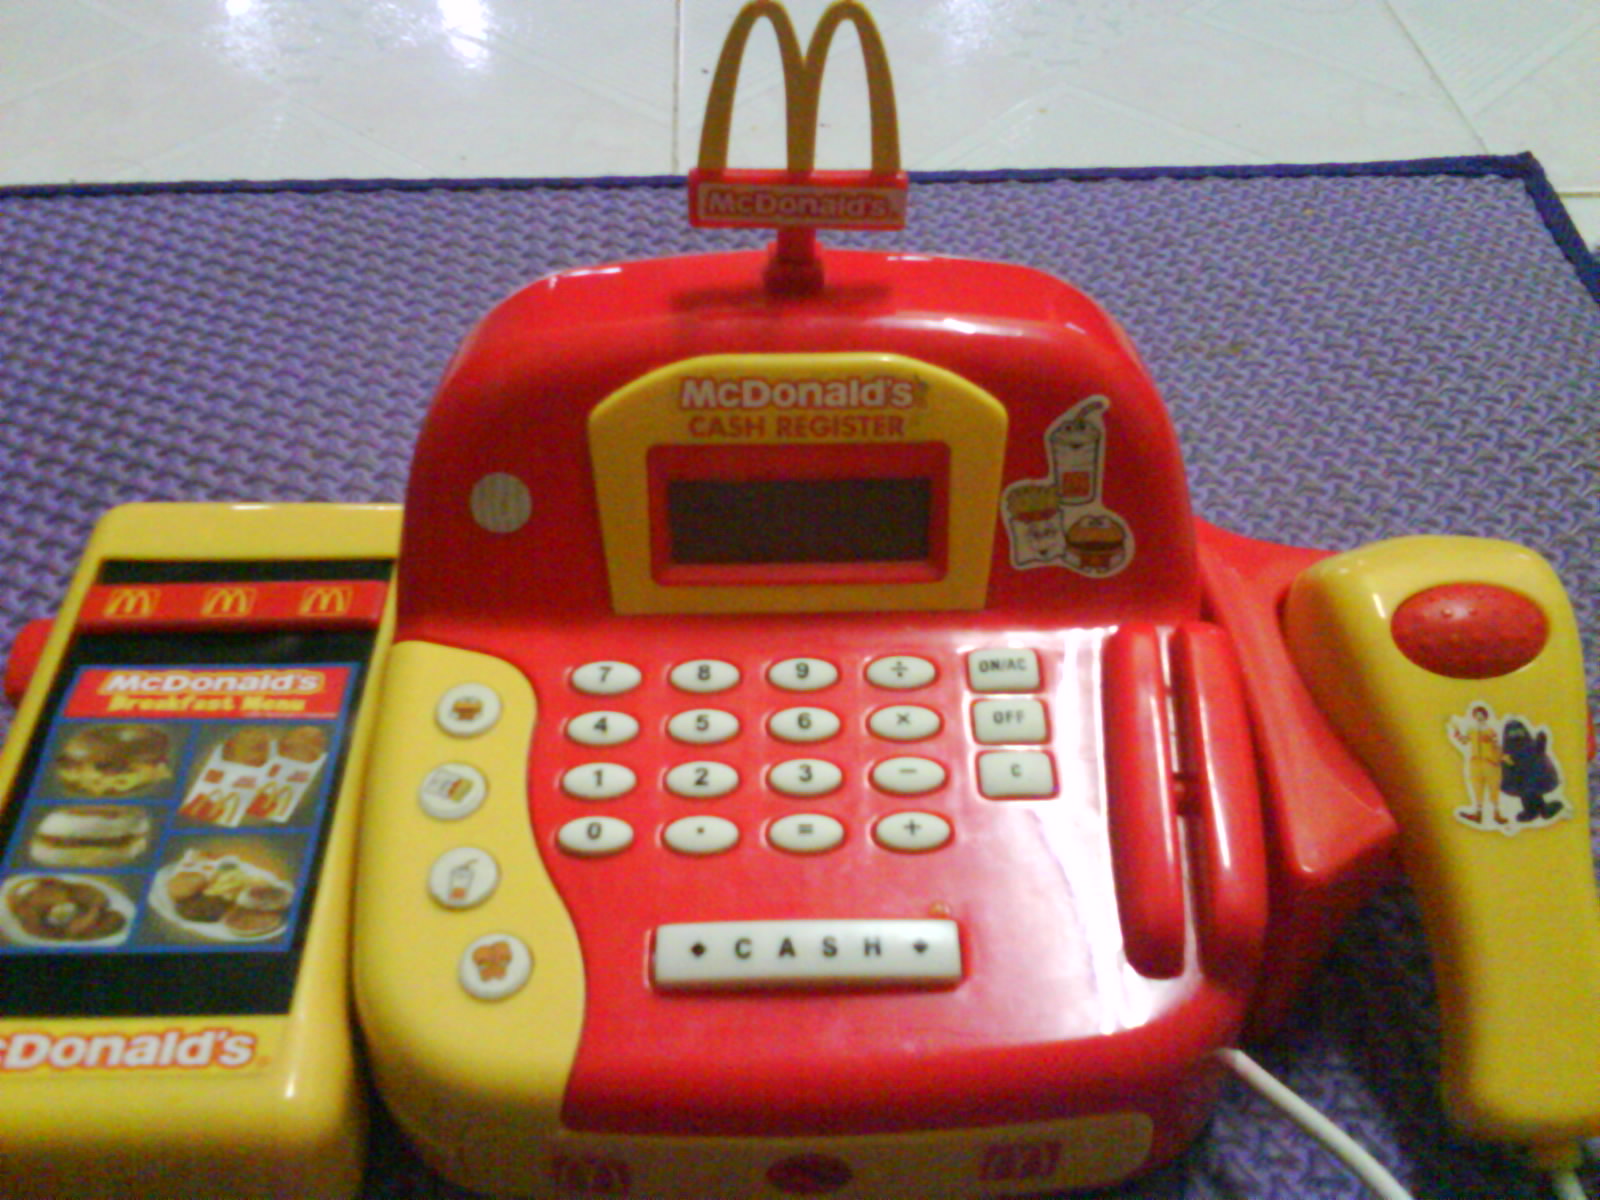  McDonald s Toy  Cash Register Bing images